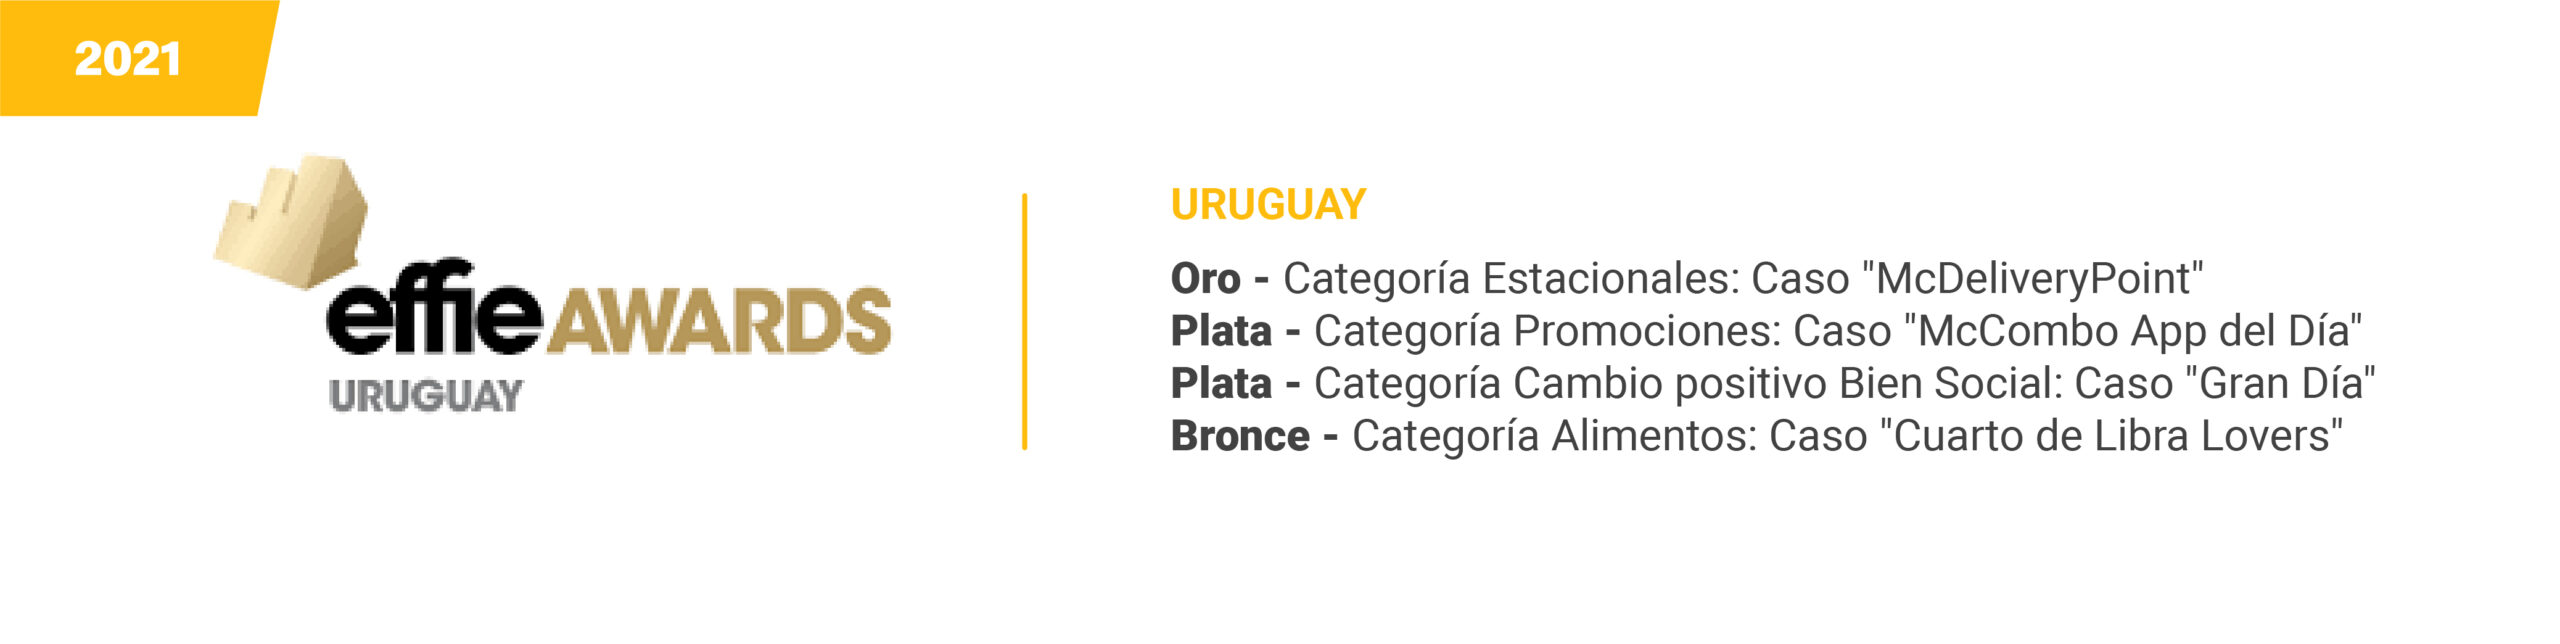 Effie Awards Uruguay